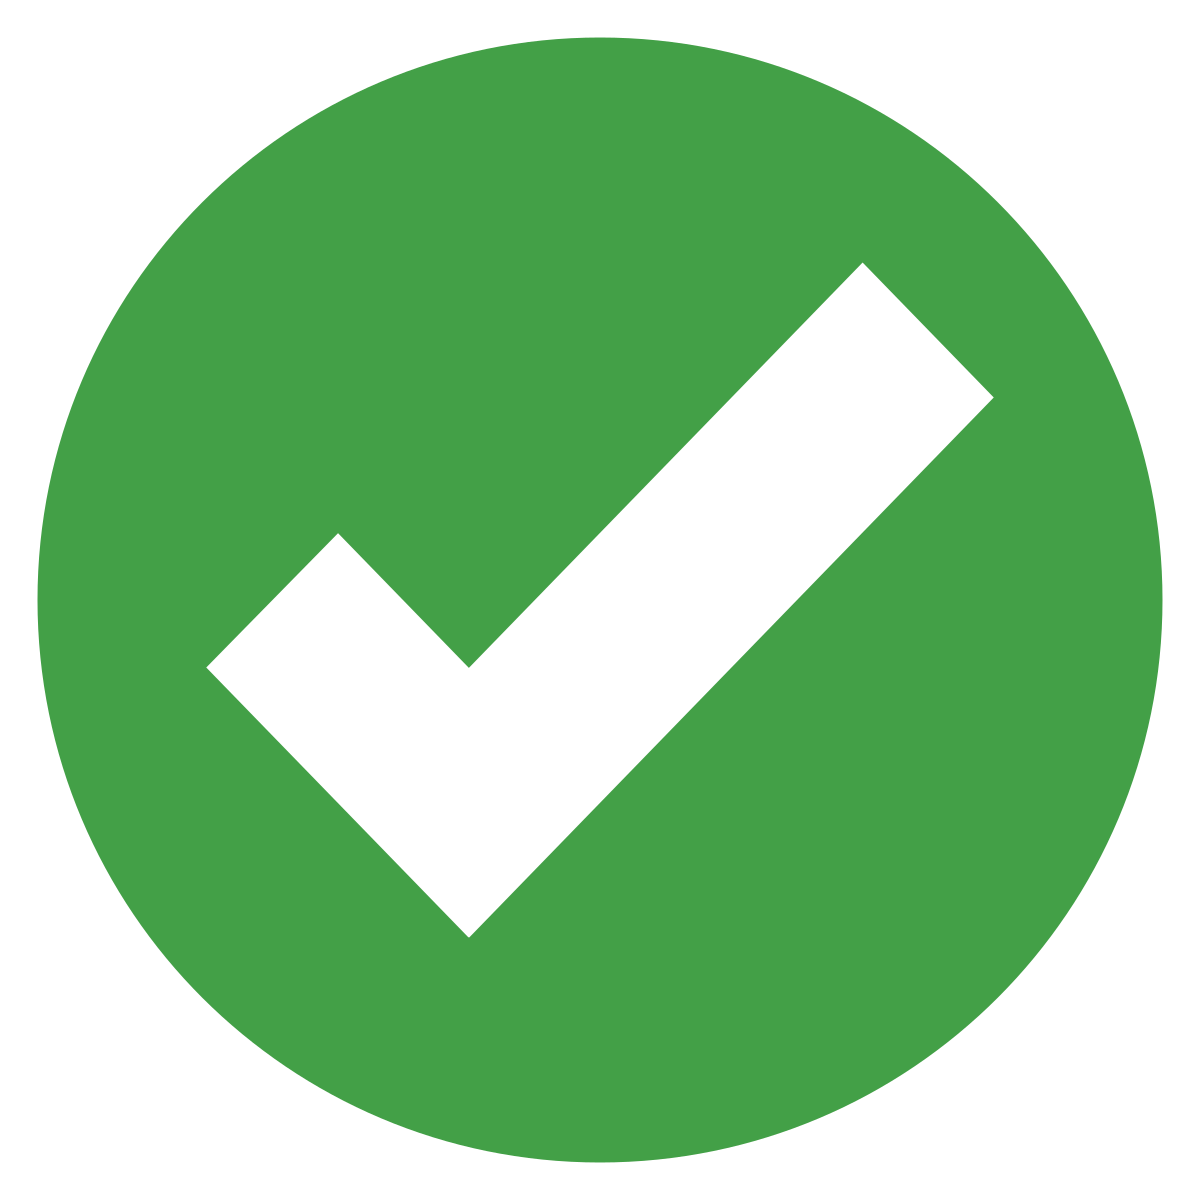 Checkmark or green tick mark